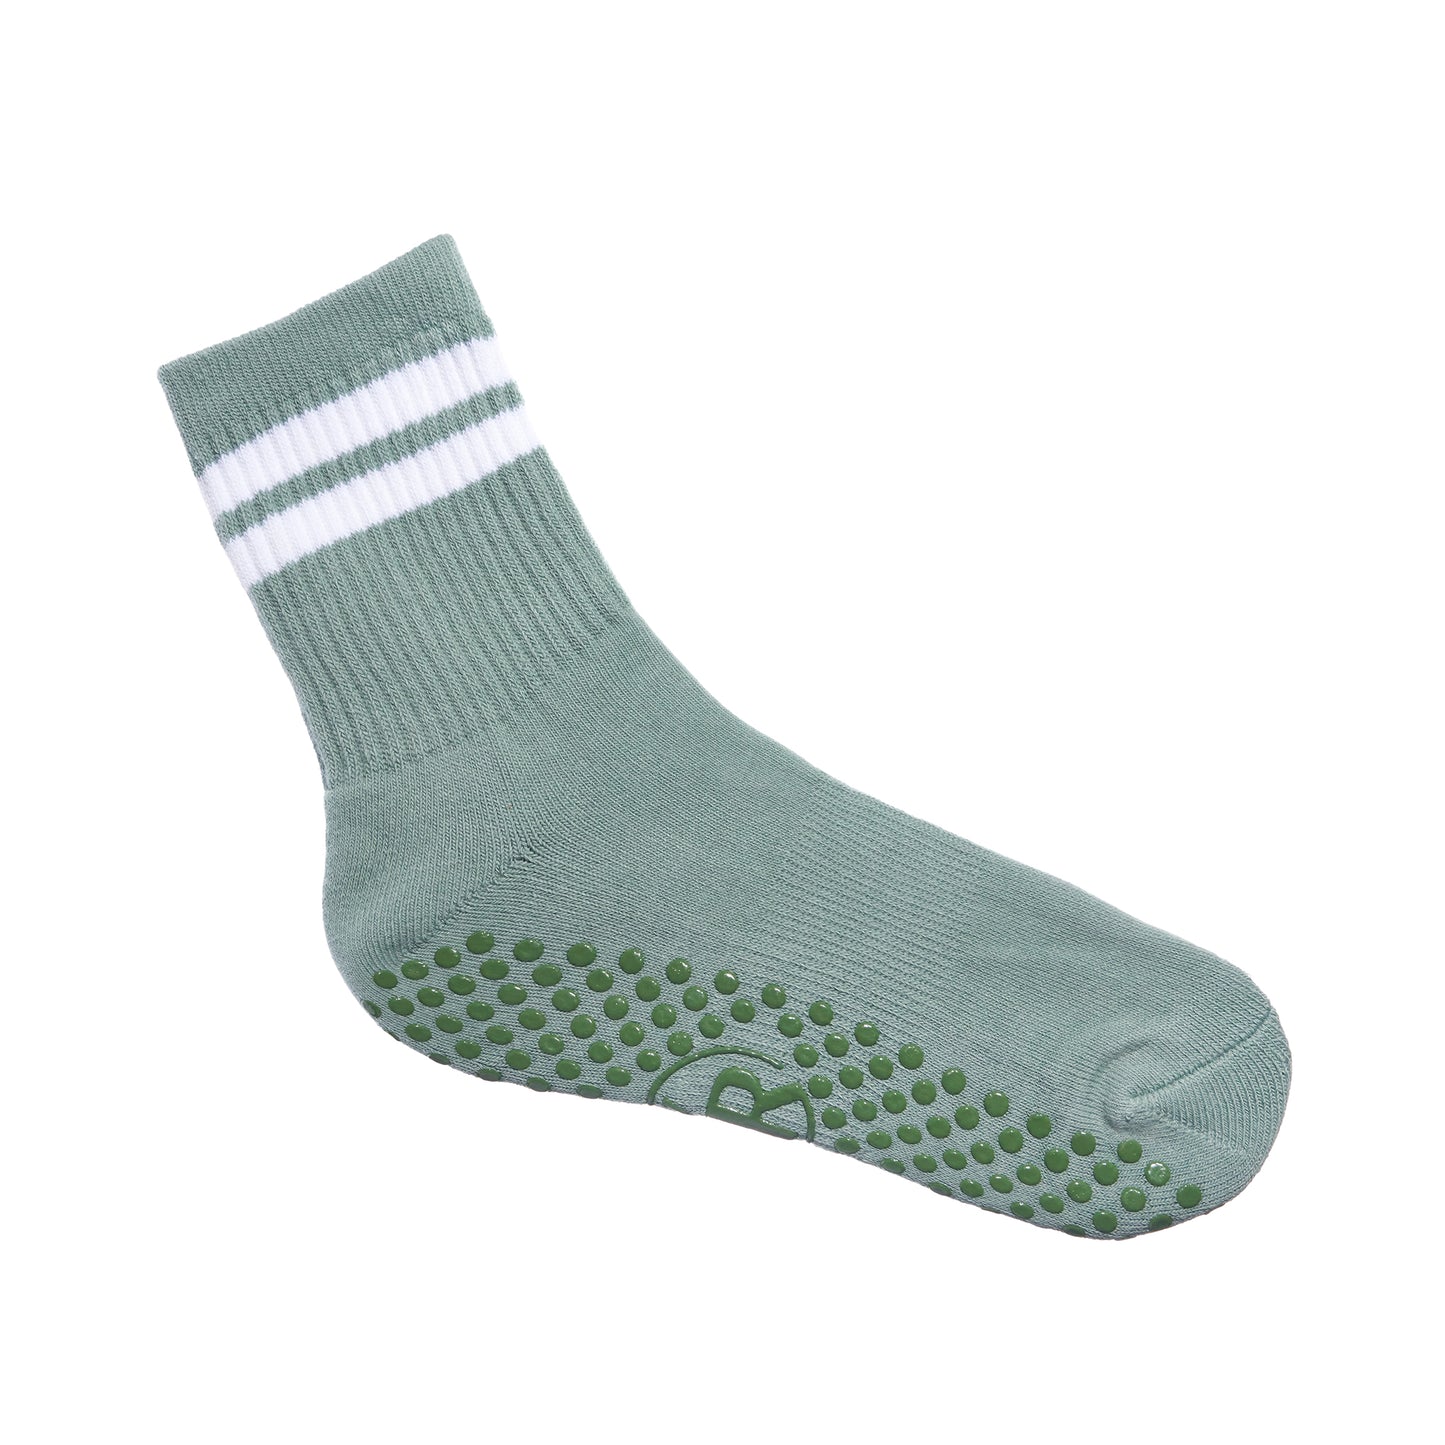 Grip Socks – Your Reformer